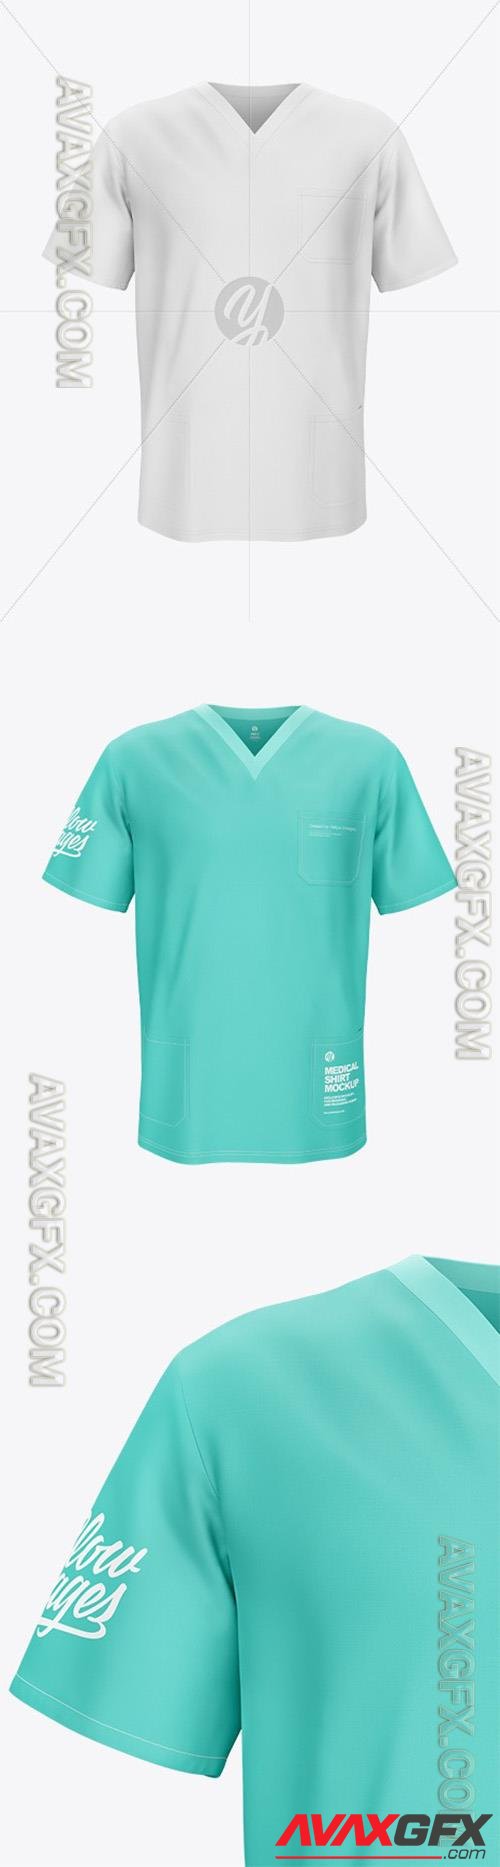 Men's Medical Shirt Mockup - Front View 90967